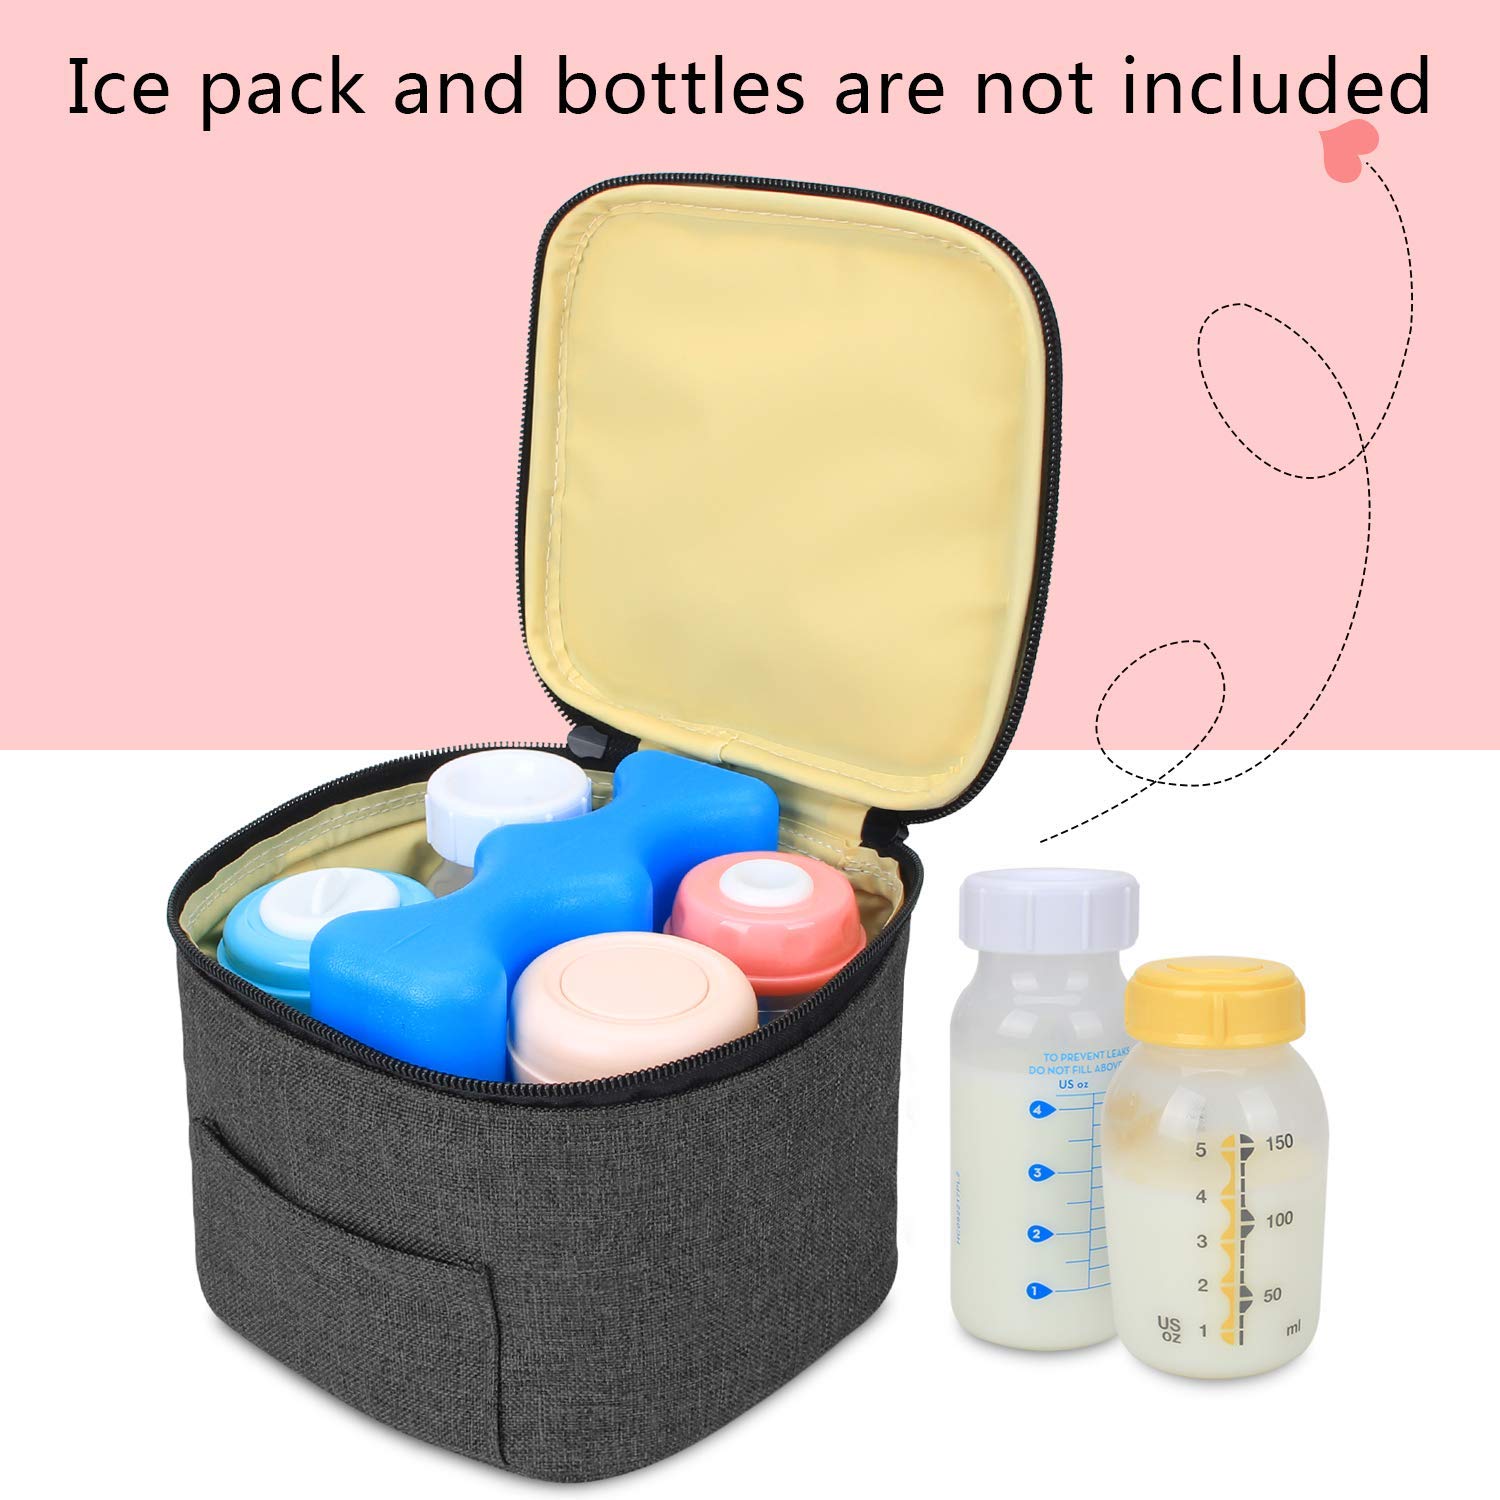 Luxja Breastmilk Cooler Bag (Hold Four 5 Ounce Breastmilk Bottles) and Reusable Ice Packs Bundle, Black